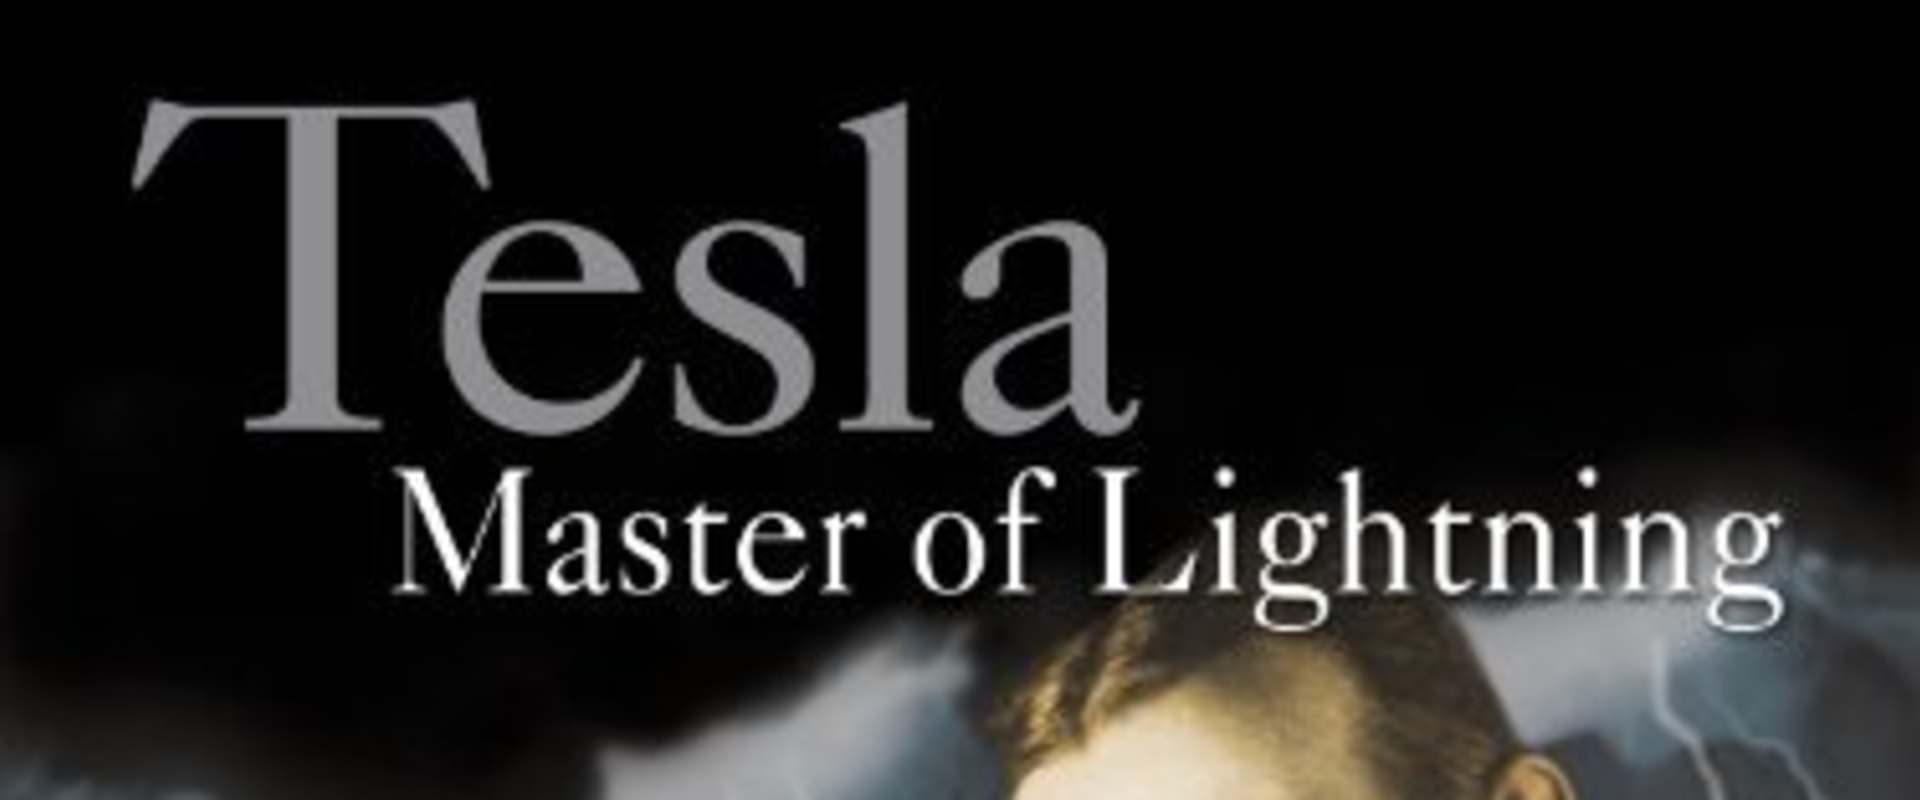 Tesla: Master of Lightning background 1